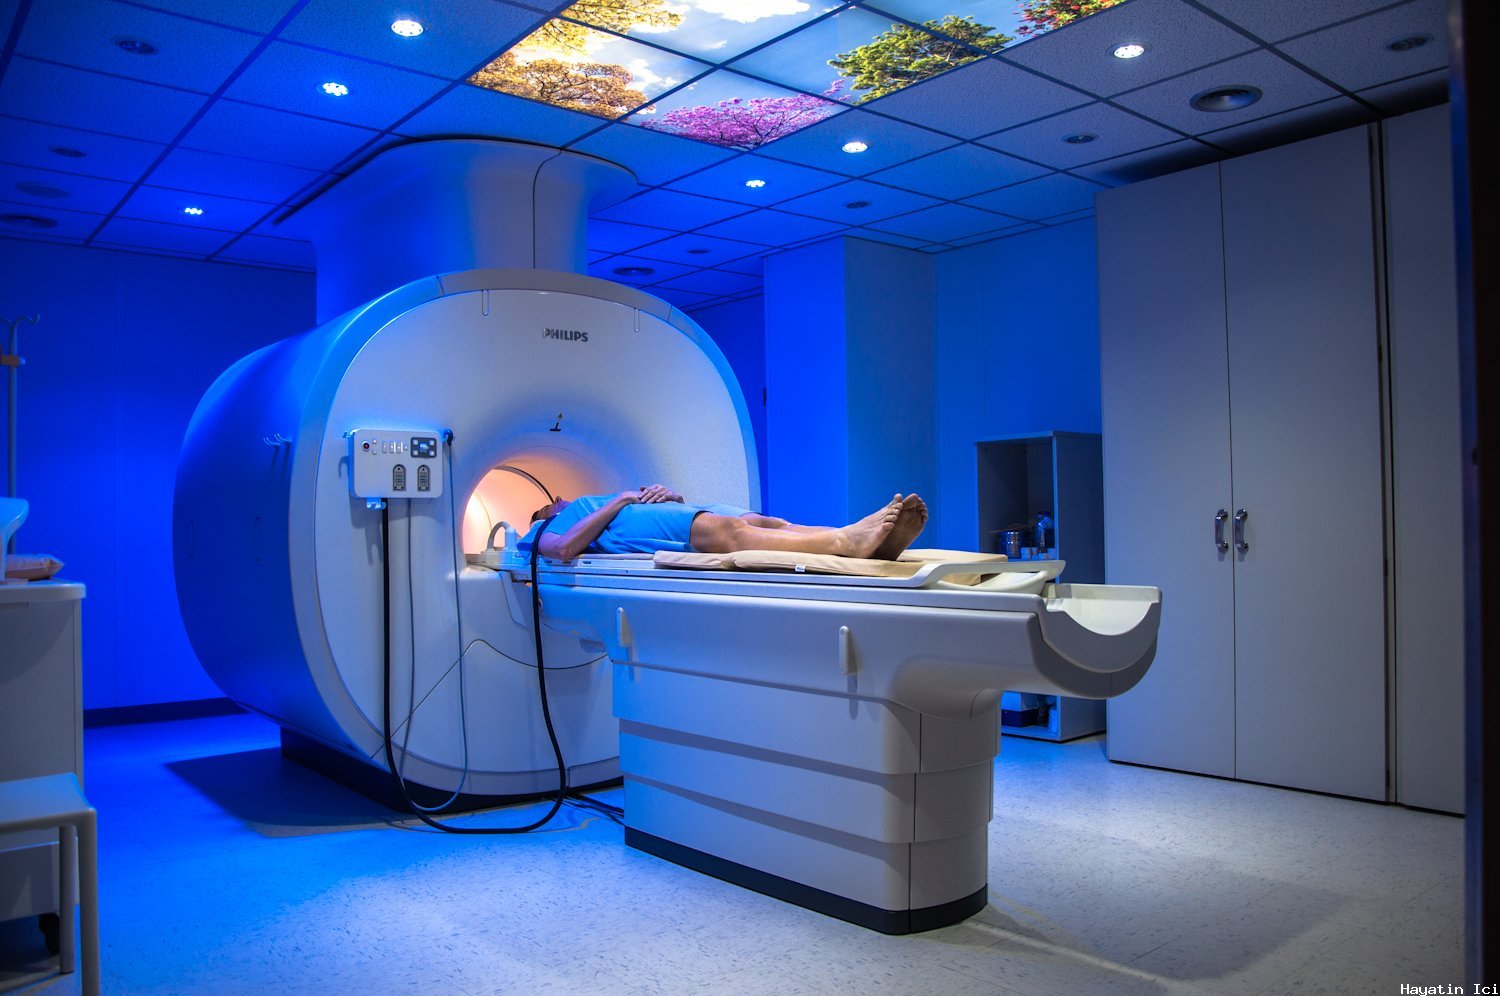 Manyetik rezonans görüntüleme ( MRI ) nedir?